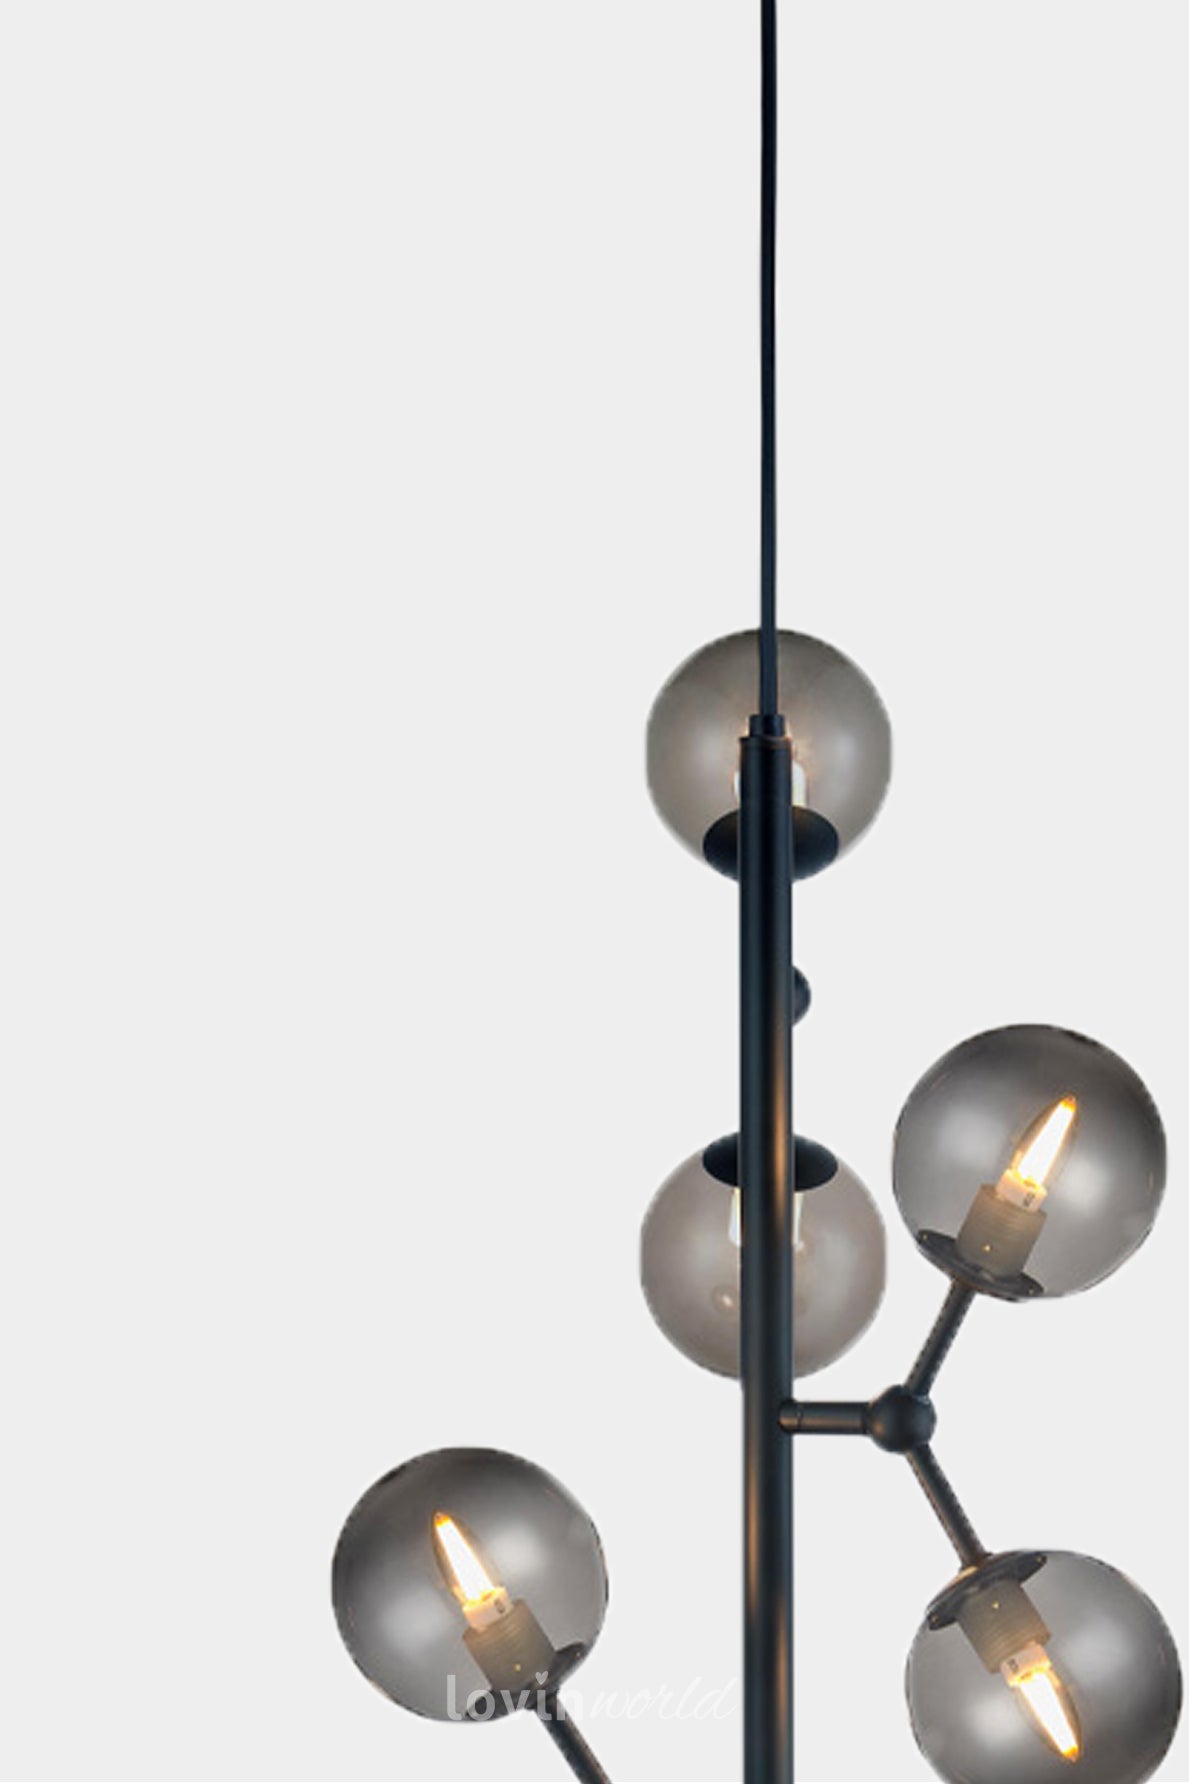 Lampada a sospensione Atom verticale, in colore nero-LovinWorld